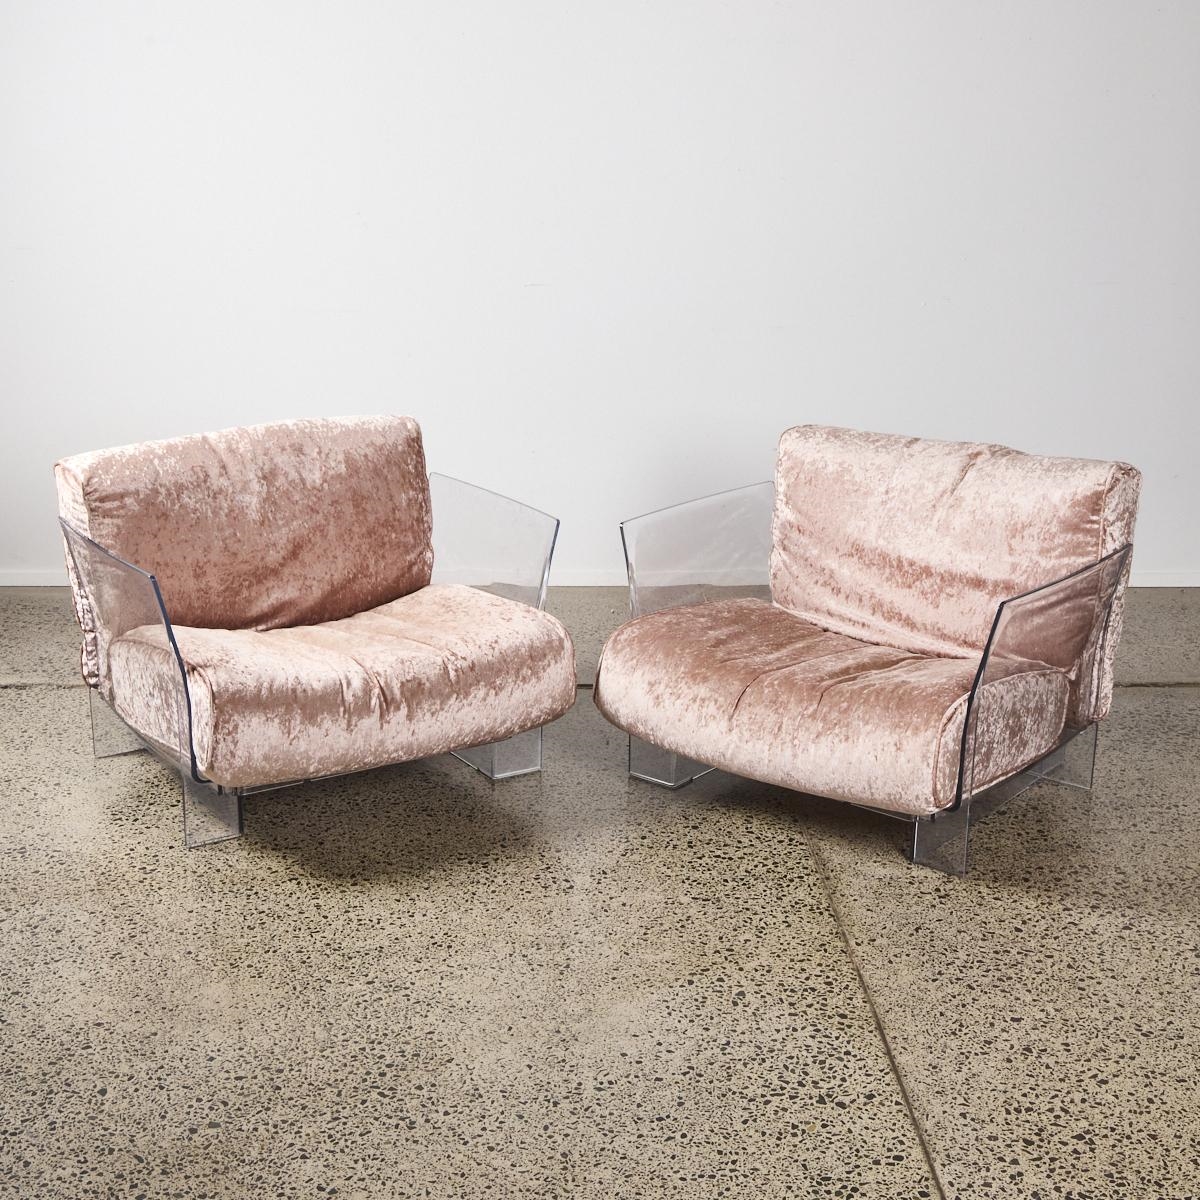 A Pop Lounge Chairs By Piero Lissoni For Kartell - Piero Lissoni